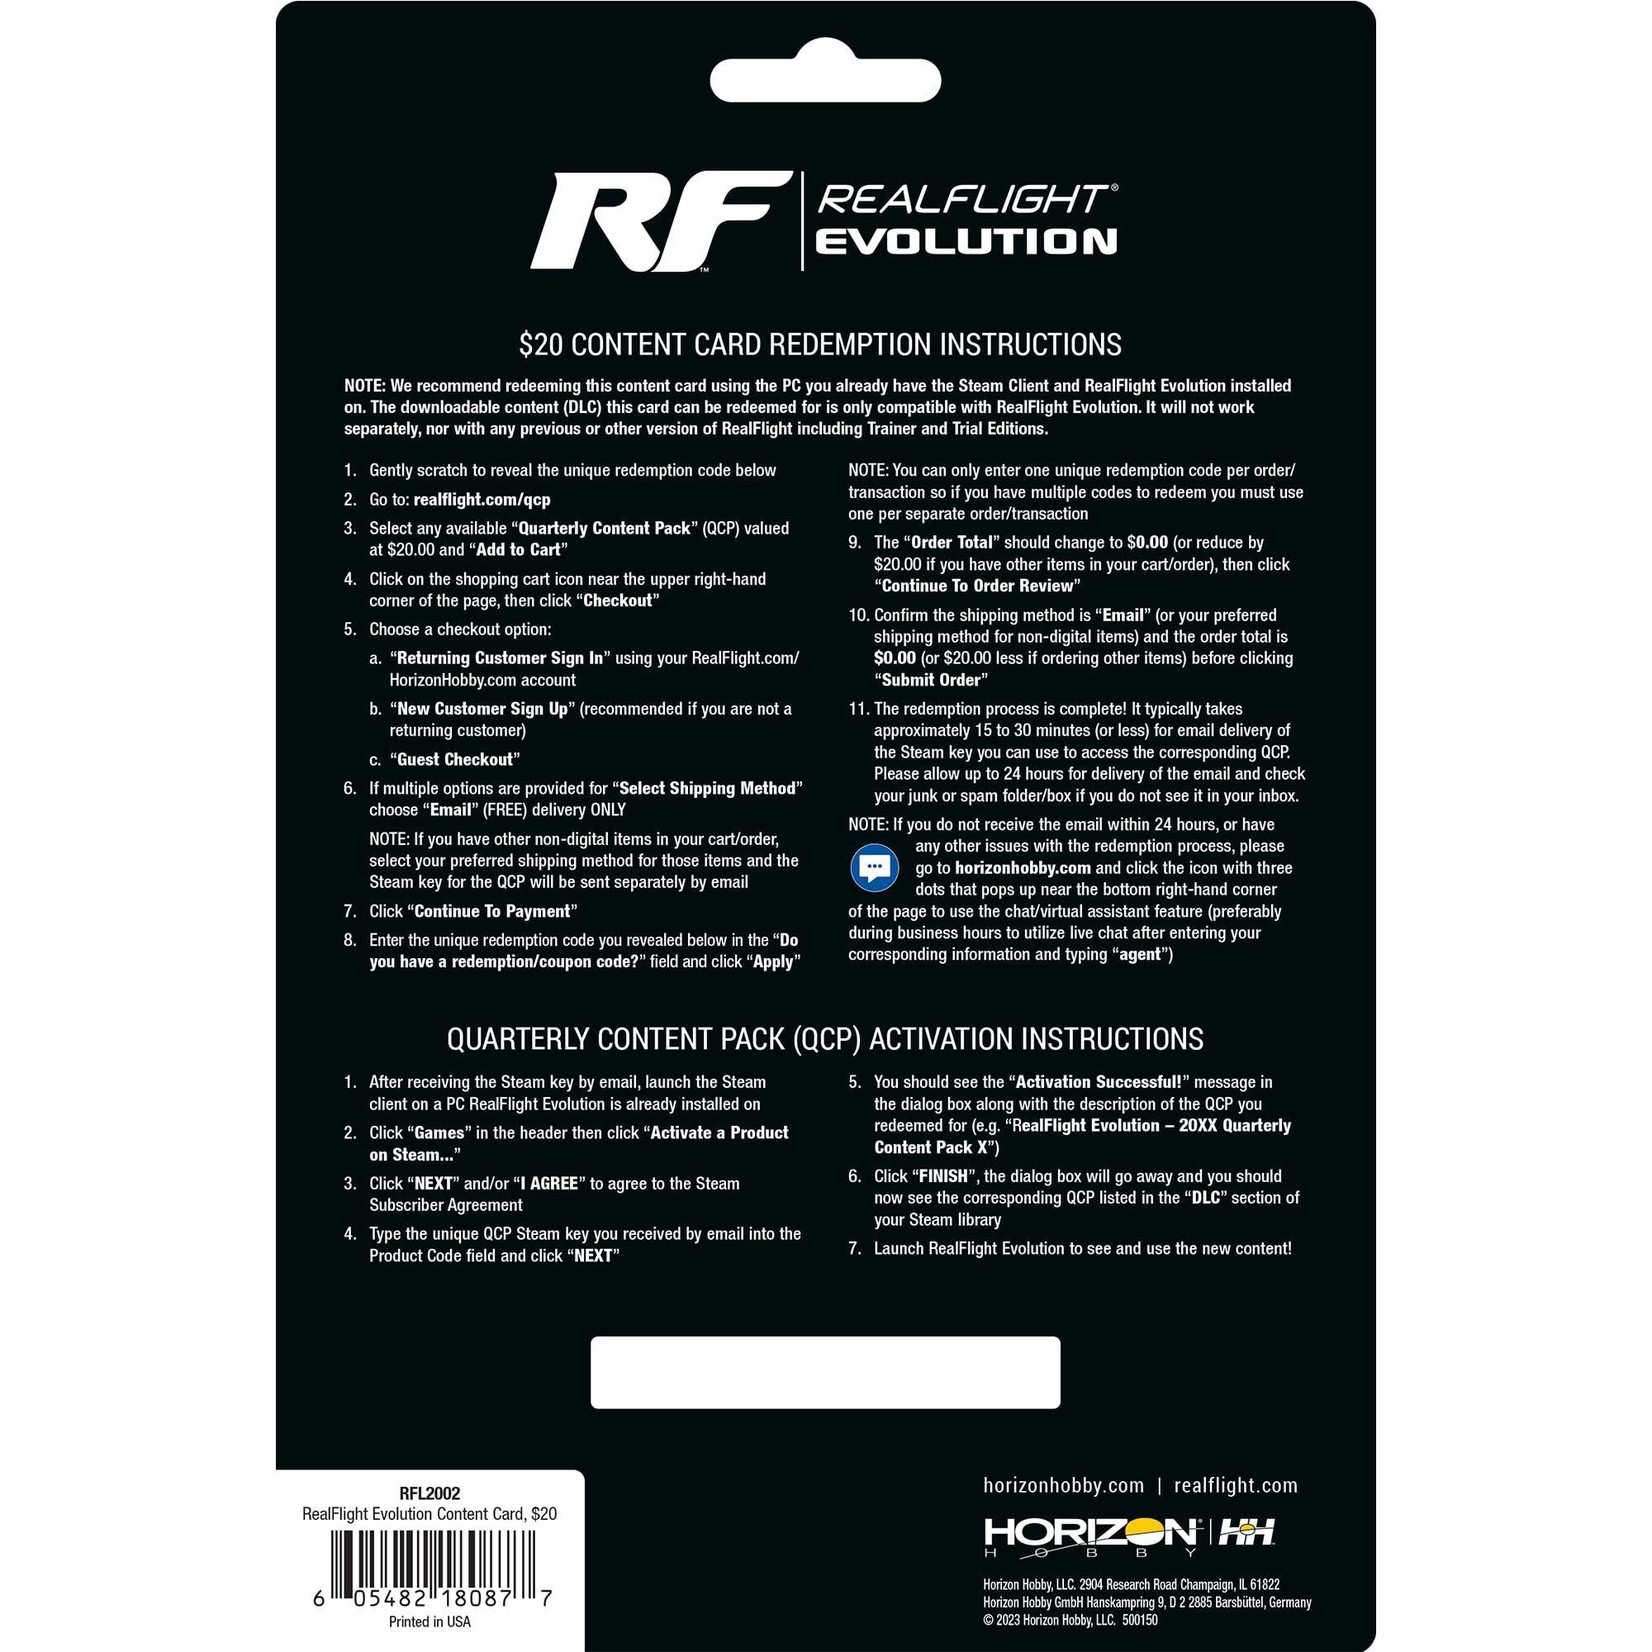 Realflight RealFlight Content Card $20